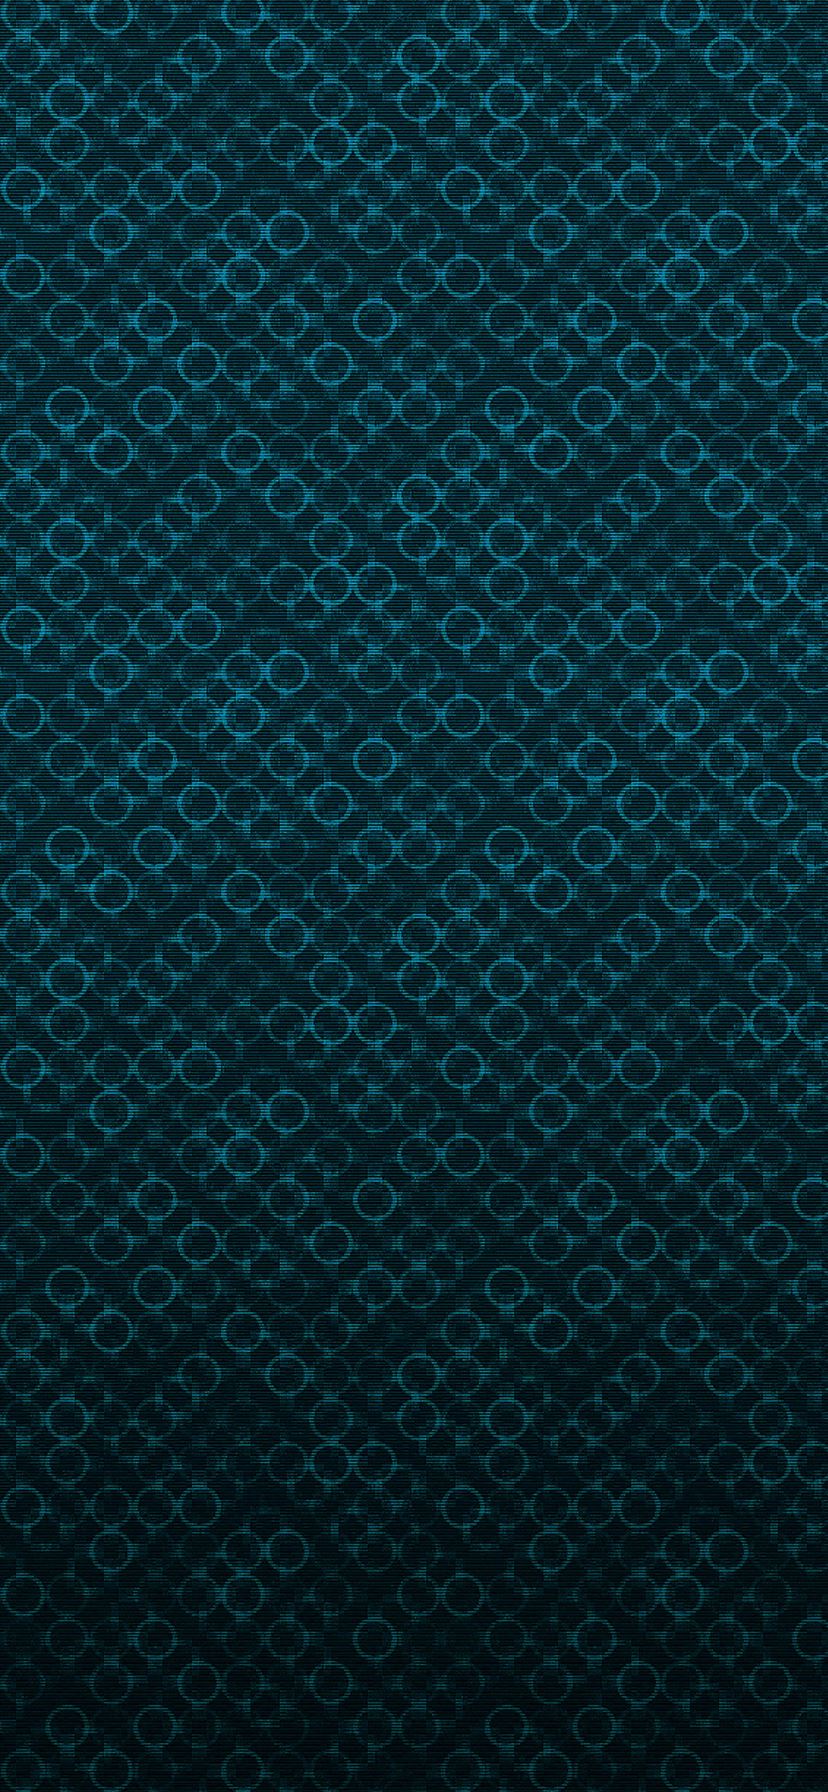 Strange dark blue pattern iPhone X Wallpaper Free Download